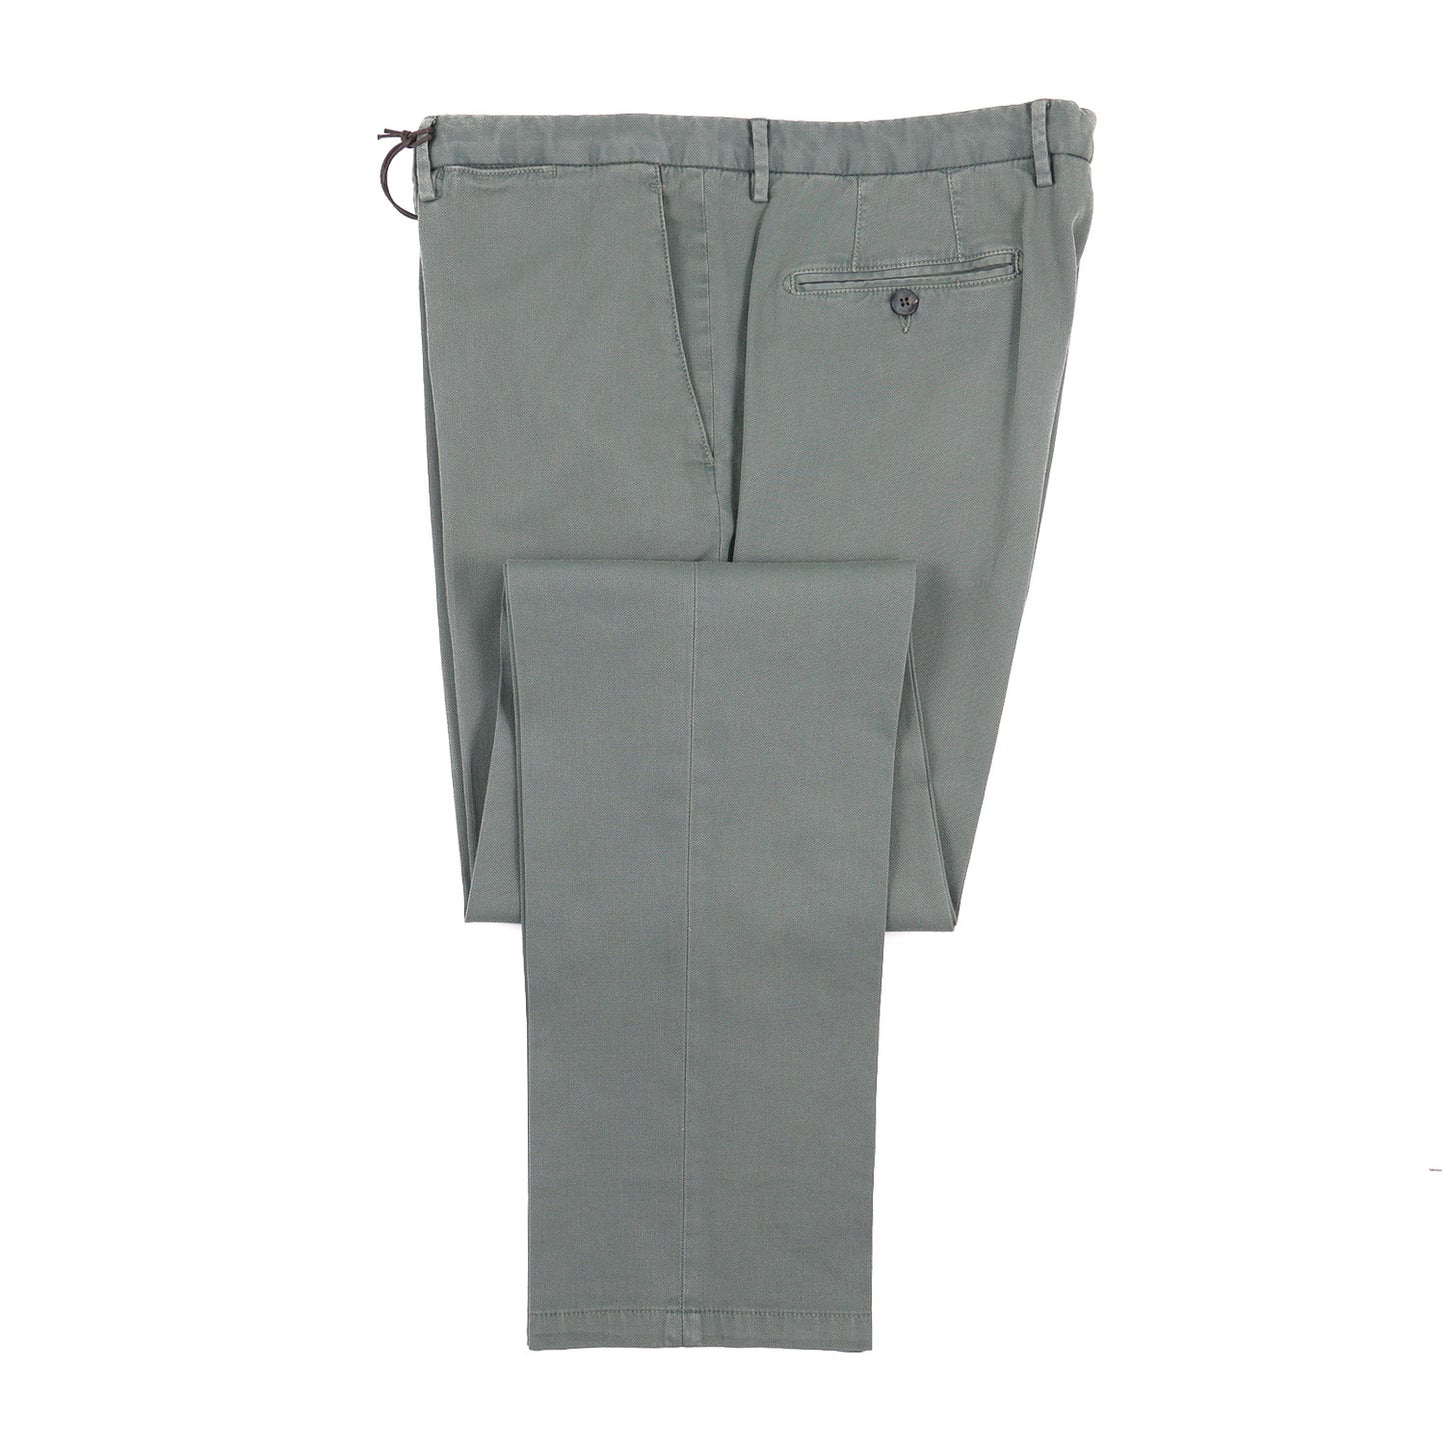 Boglioli Woven Cotton Pants - Top Shelf Apparel